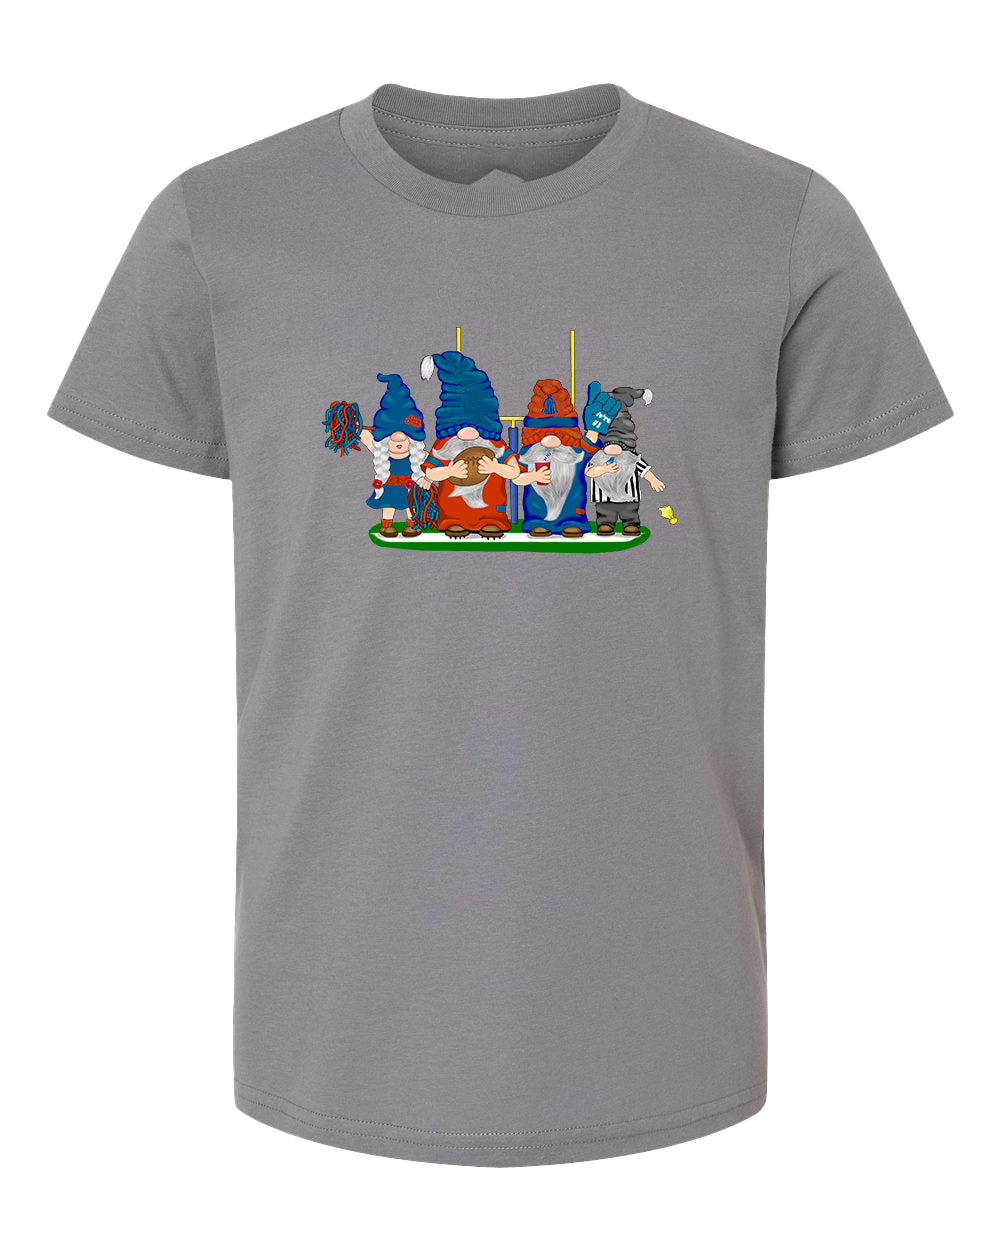 Orange & Blue Football Gnomes  (similar to Chicago) on Kids T-shirt